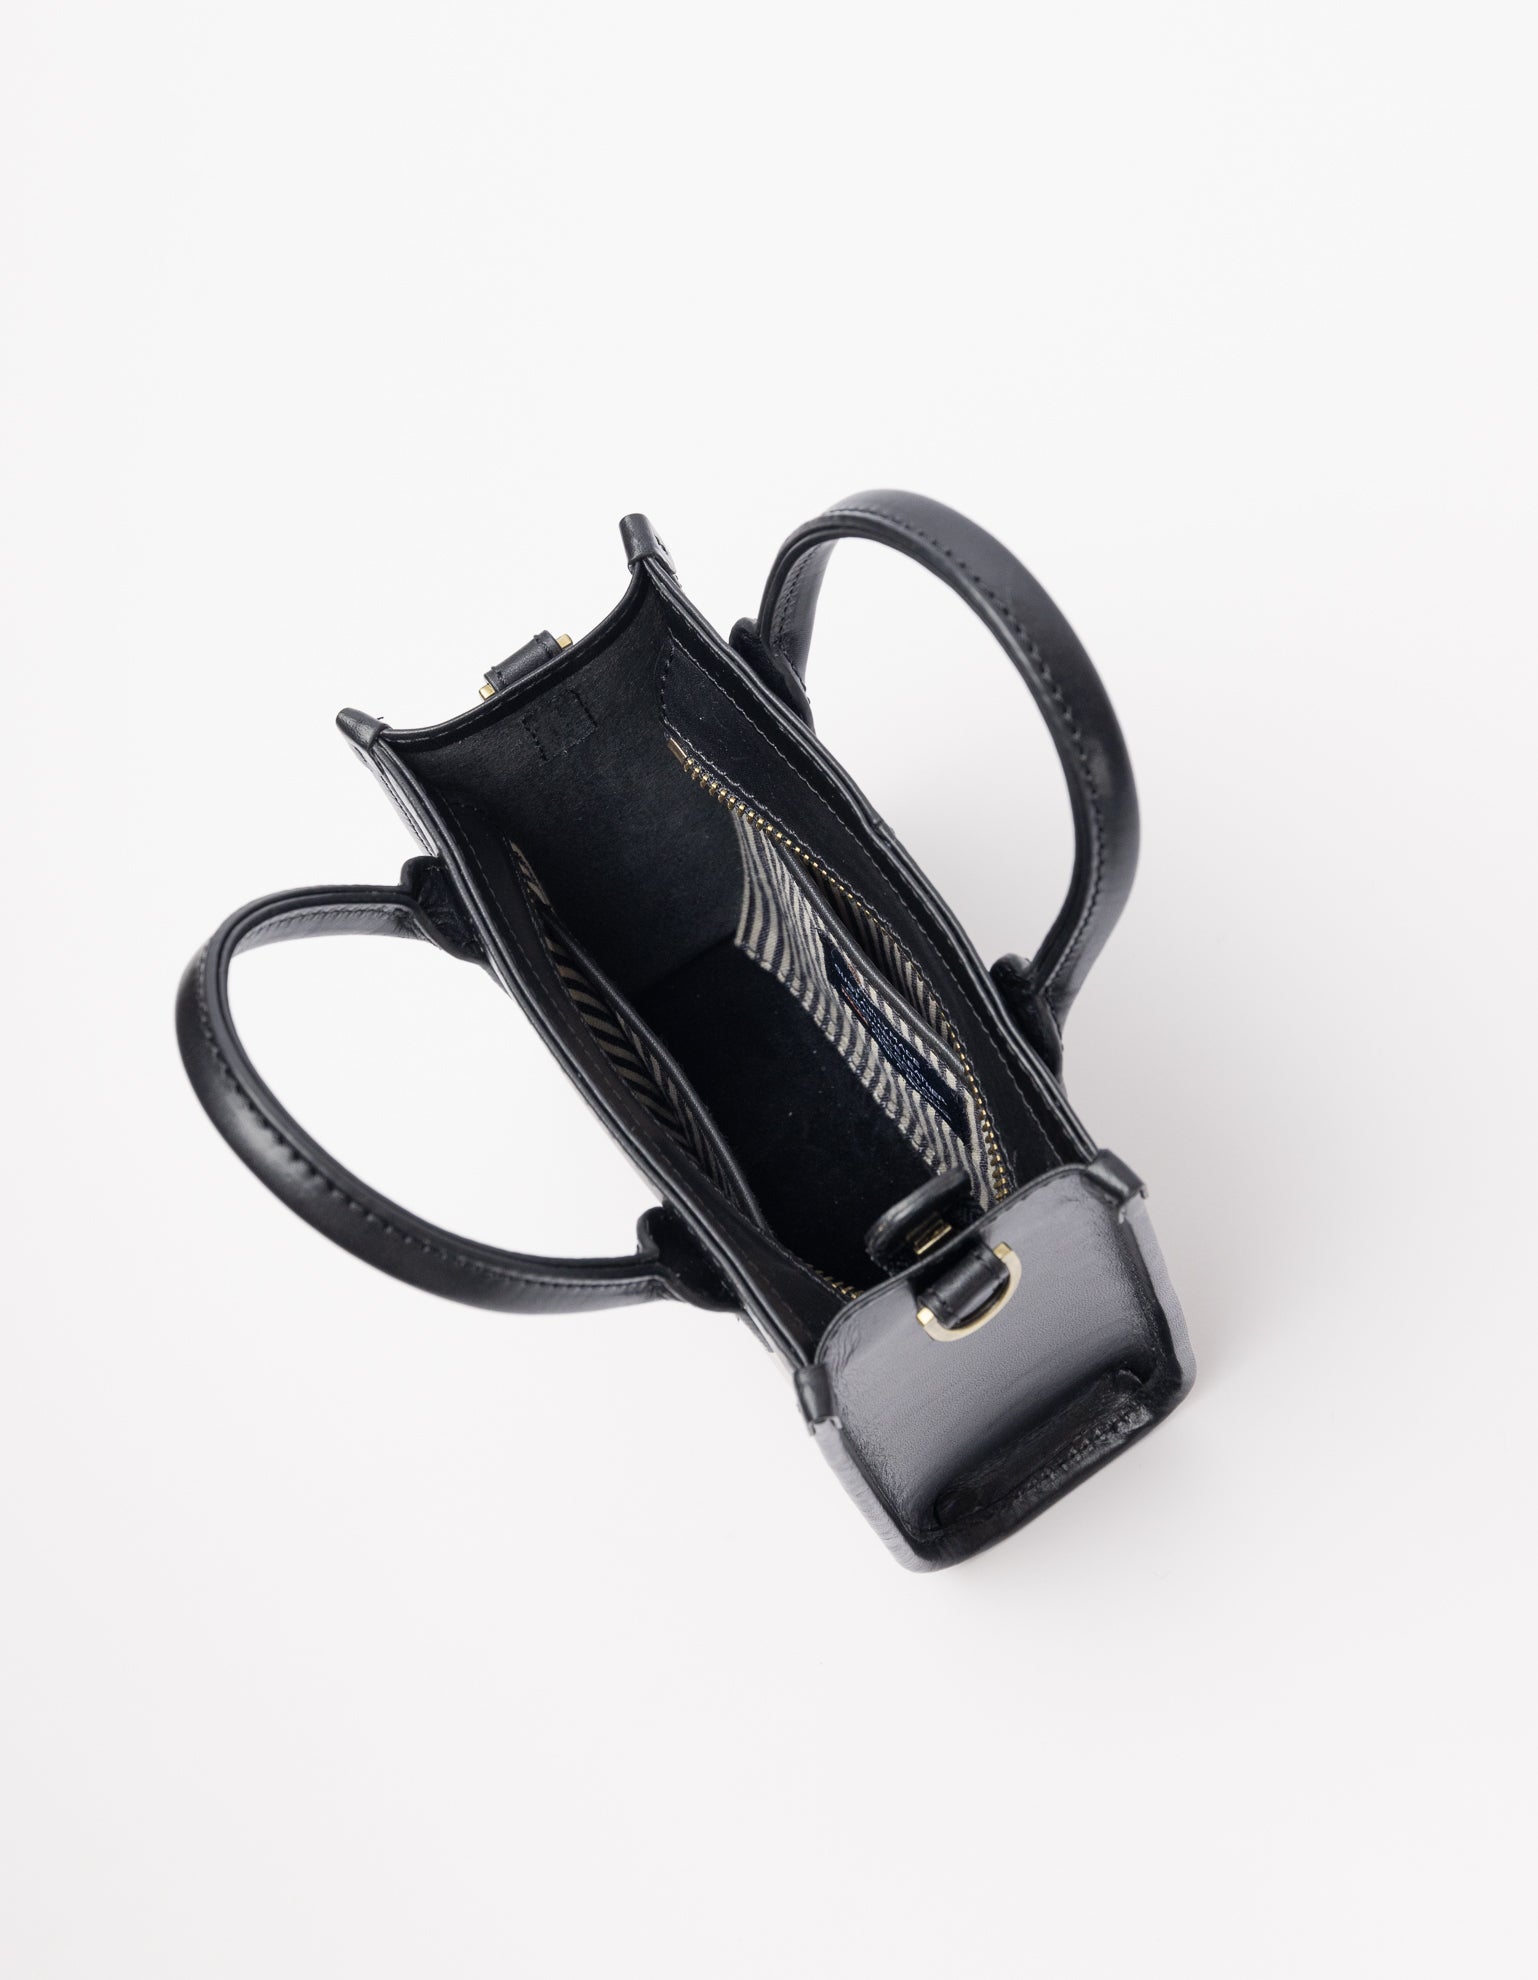 Rectangle shaped mini leather bag - inside product image